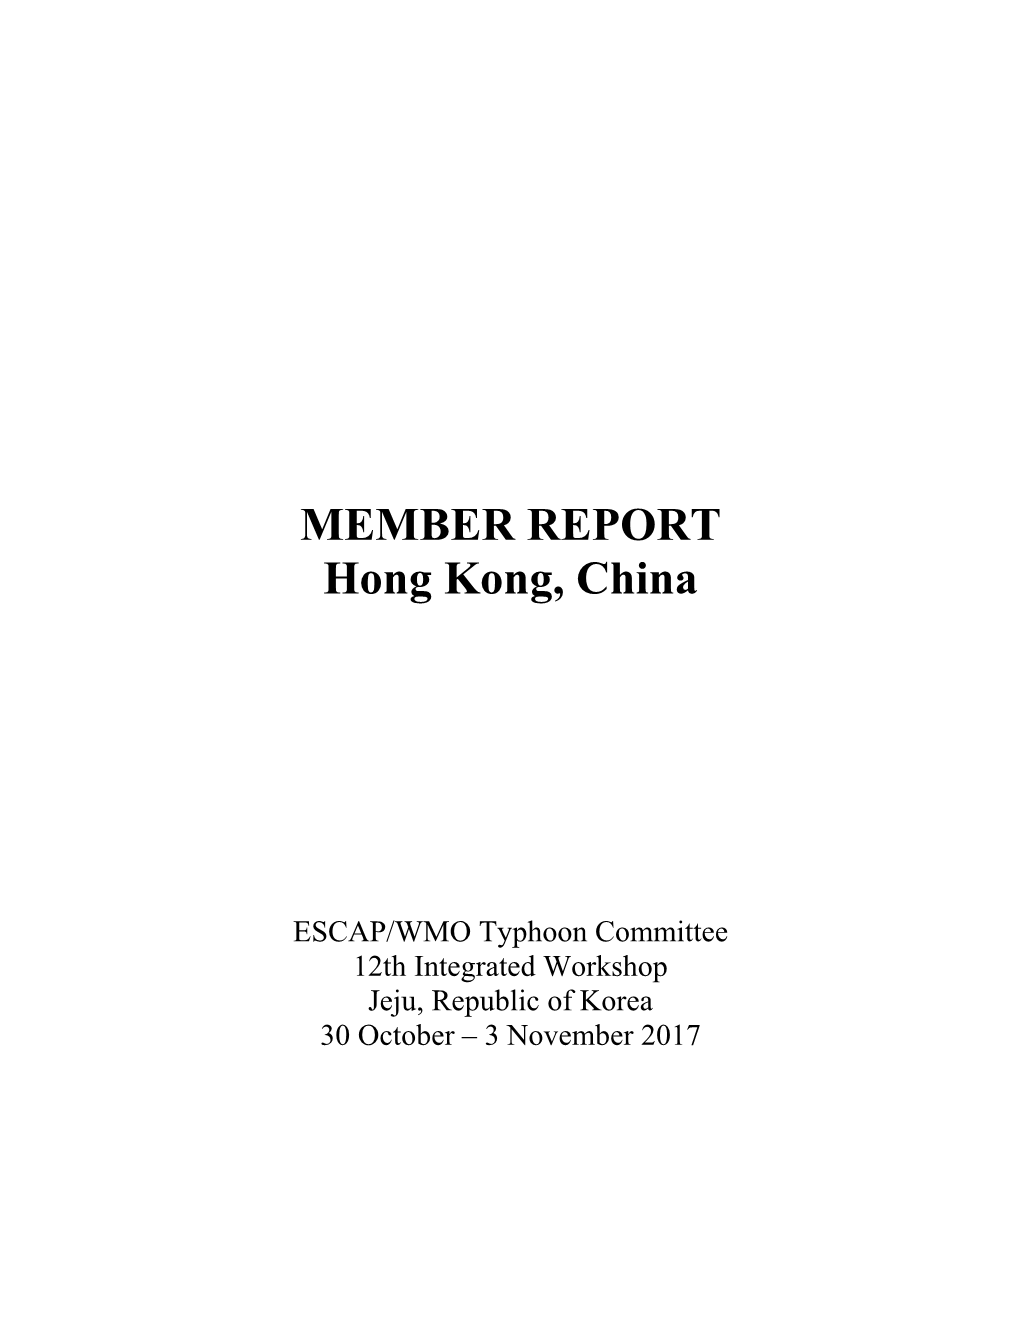 MEMBER REPORT Hong Kong, China